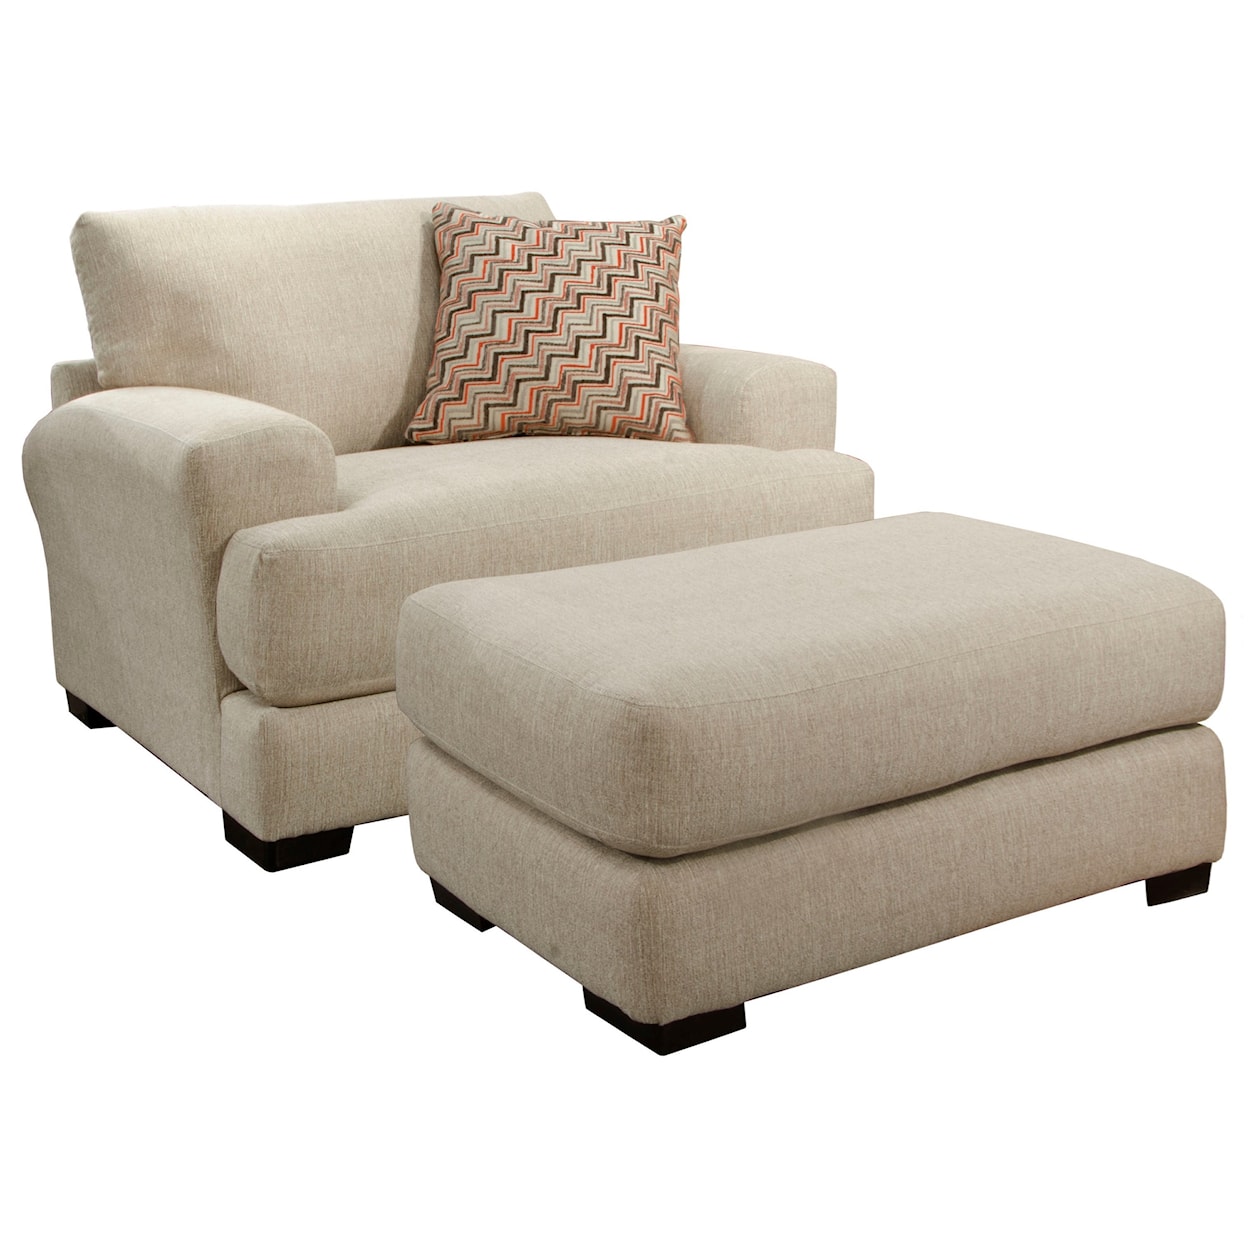 Carolina Furniture 4498 Ava Ottoman